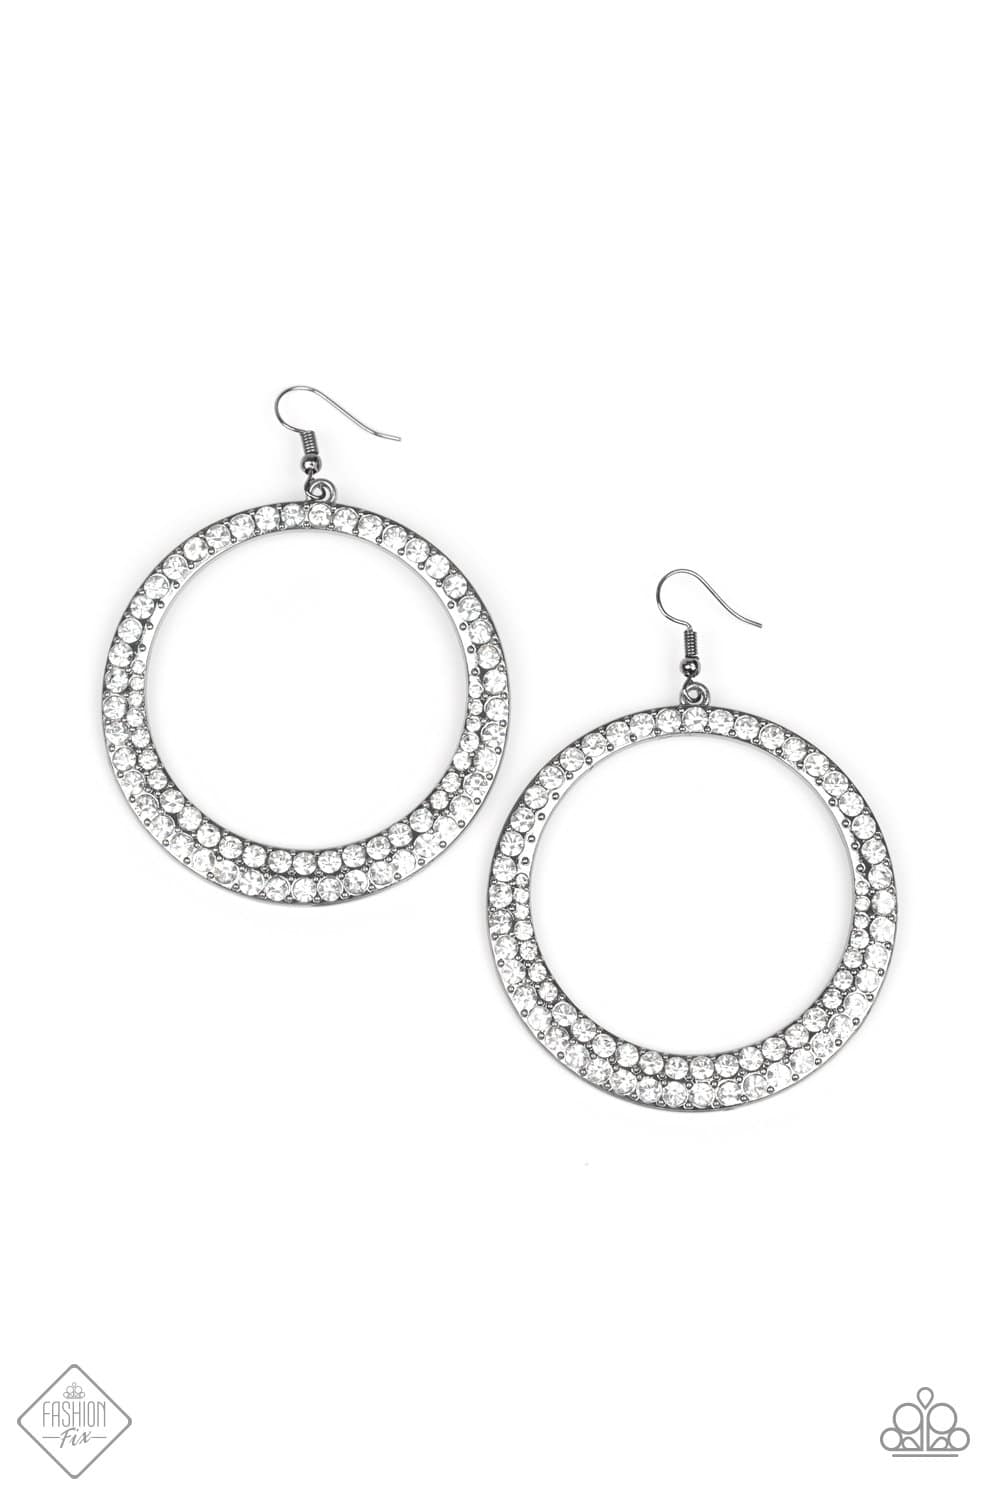 So Demanding - Black Rhinestone Earrings - Paparazzi Accessories - GlaMarous Titi Jewels